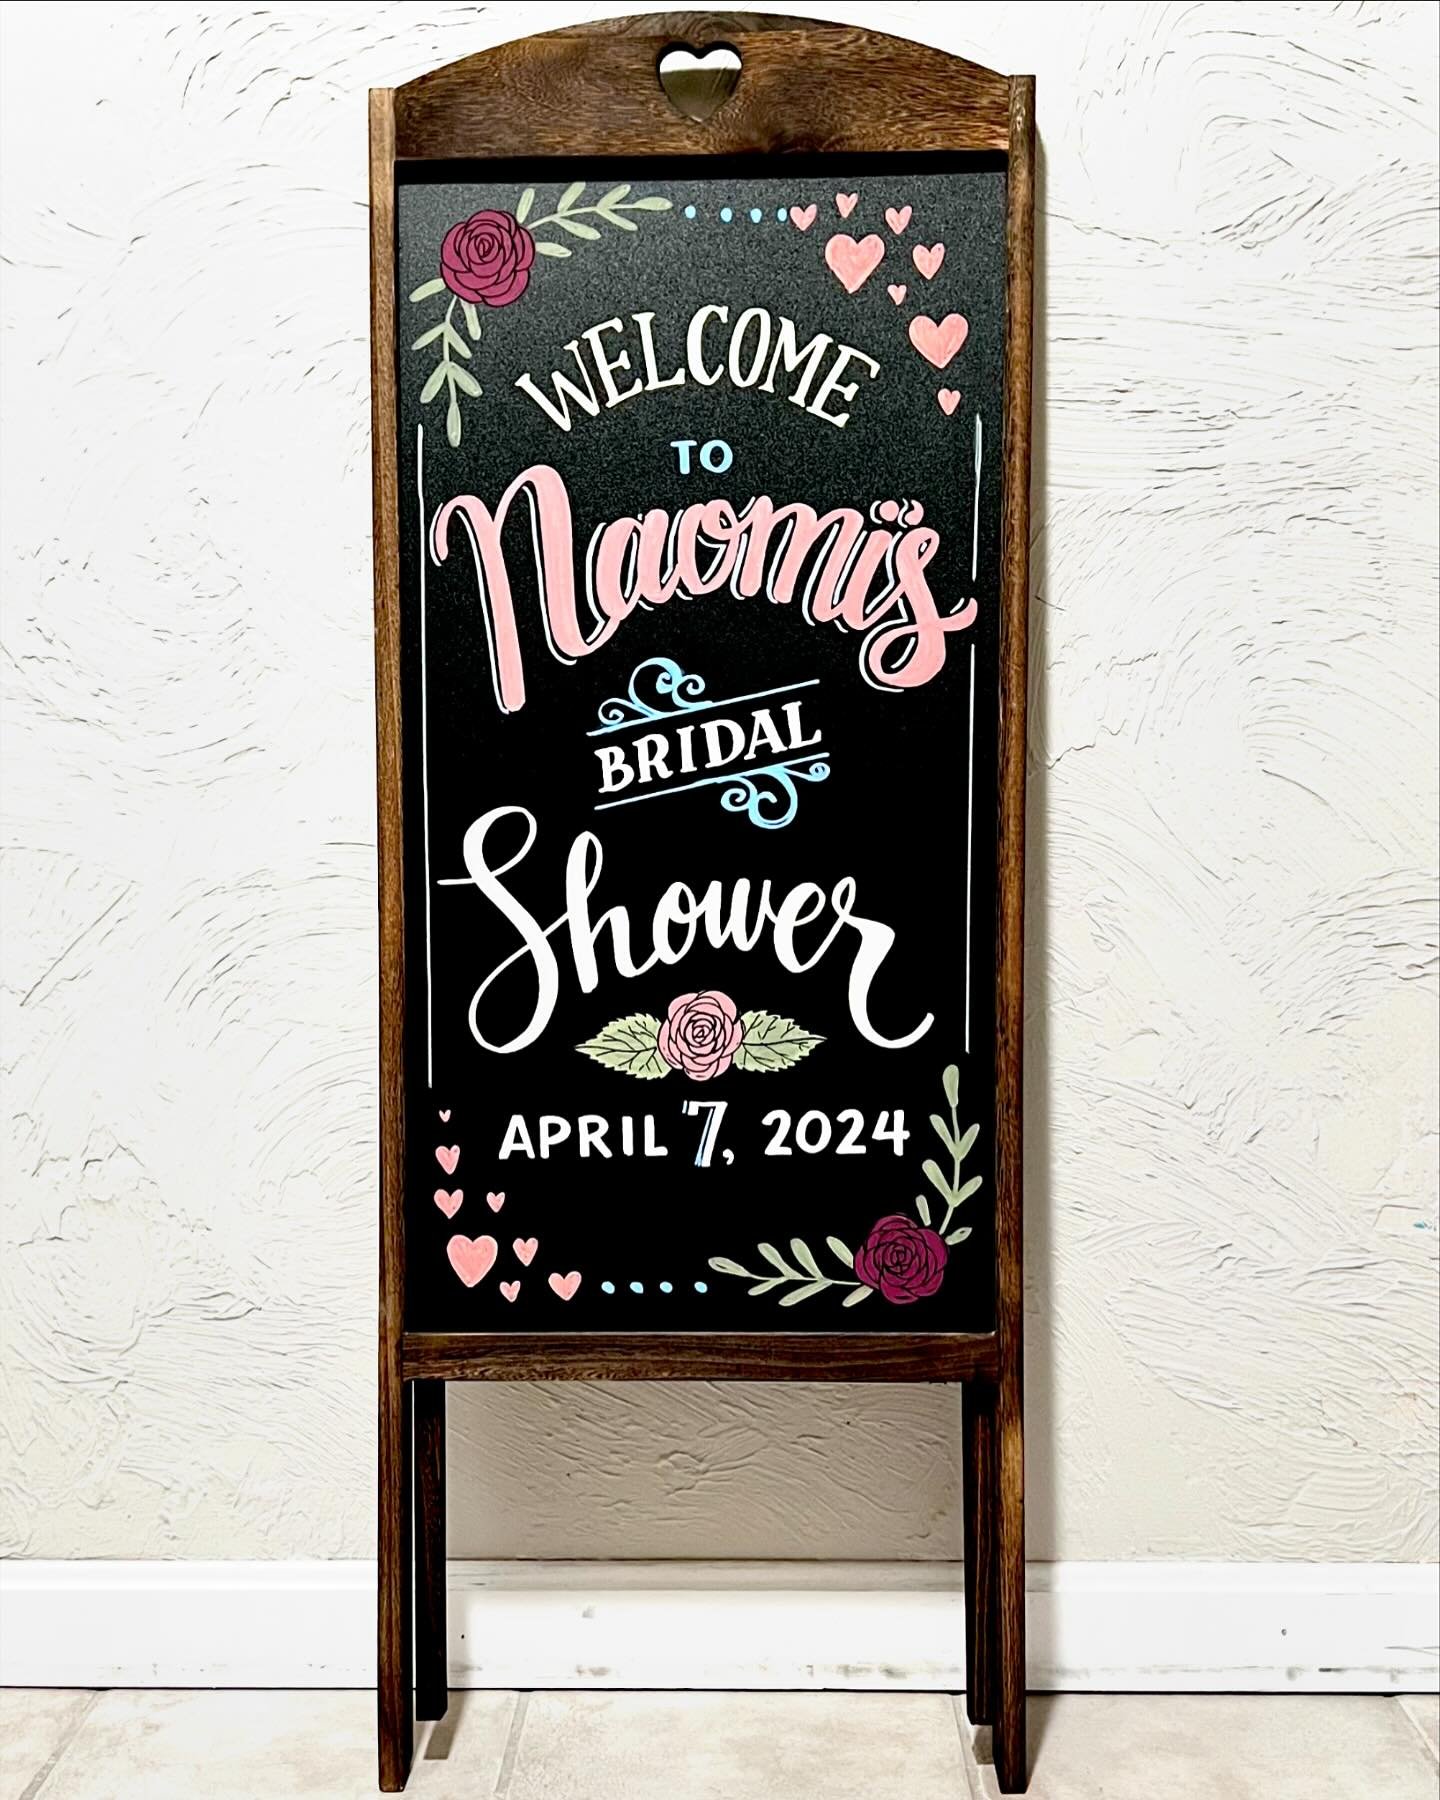 Congrats to Naomi! I hope the shower was a blast.

#chalkboardart #bridalshower #bridalshowerart #handlettering #letteringart #chalkboardartist #wedding #weddingart #weddingchalkboard